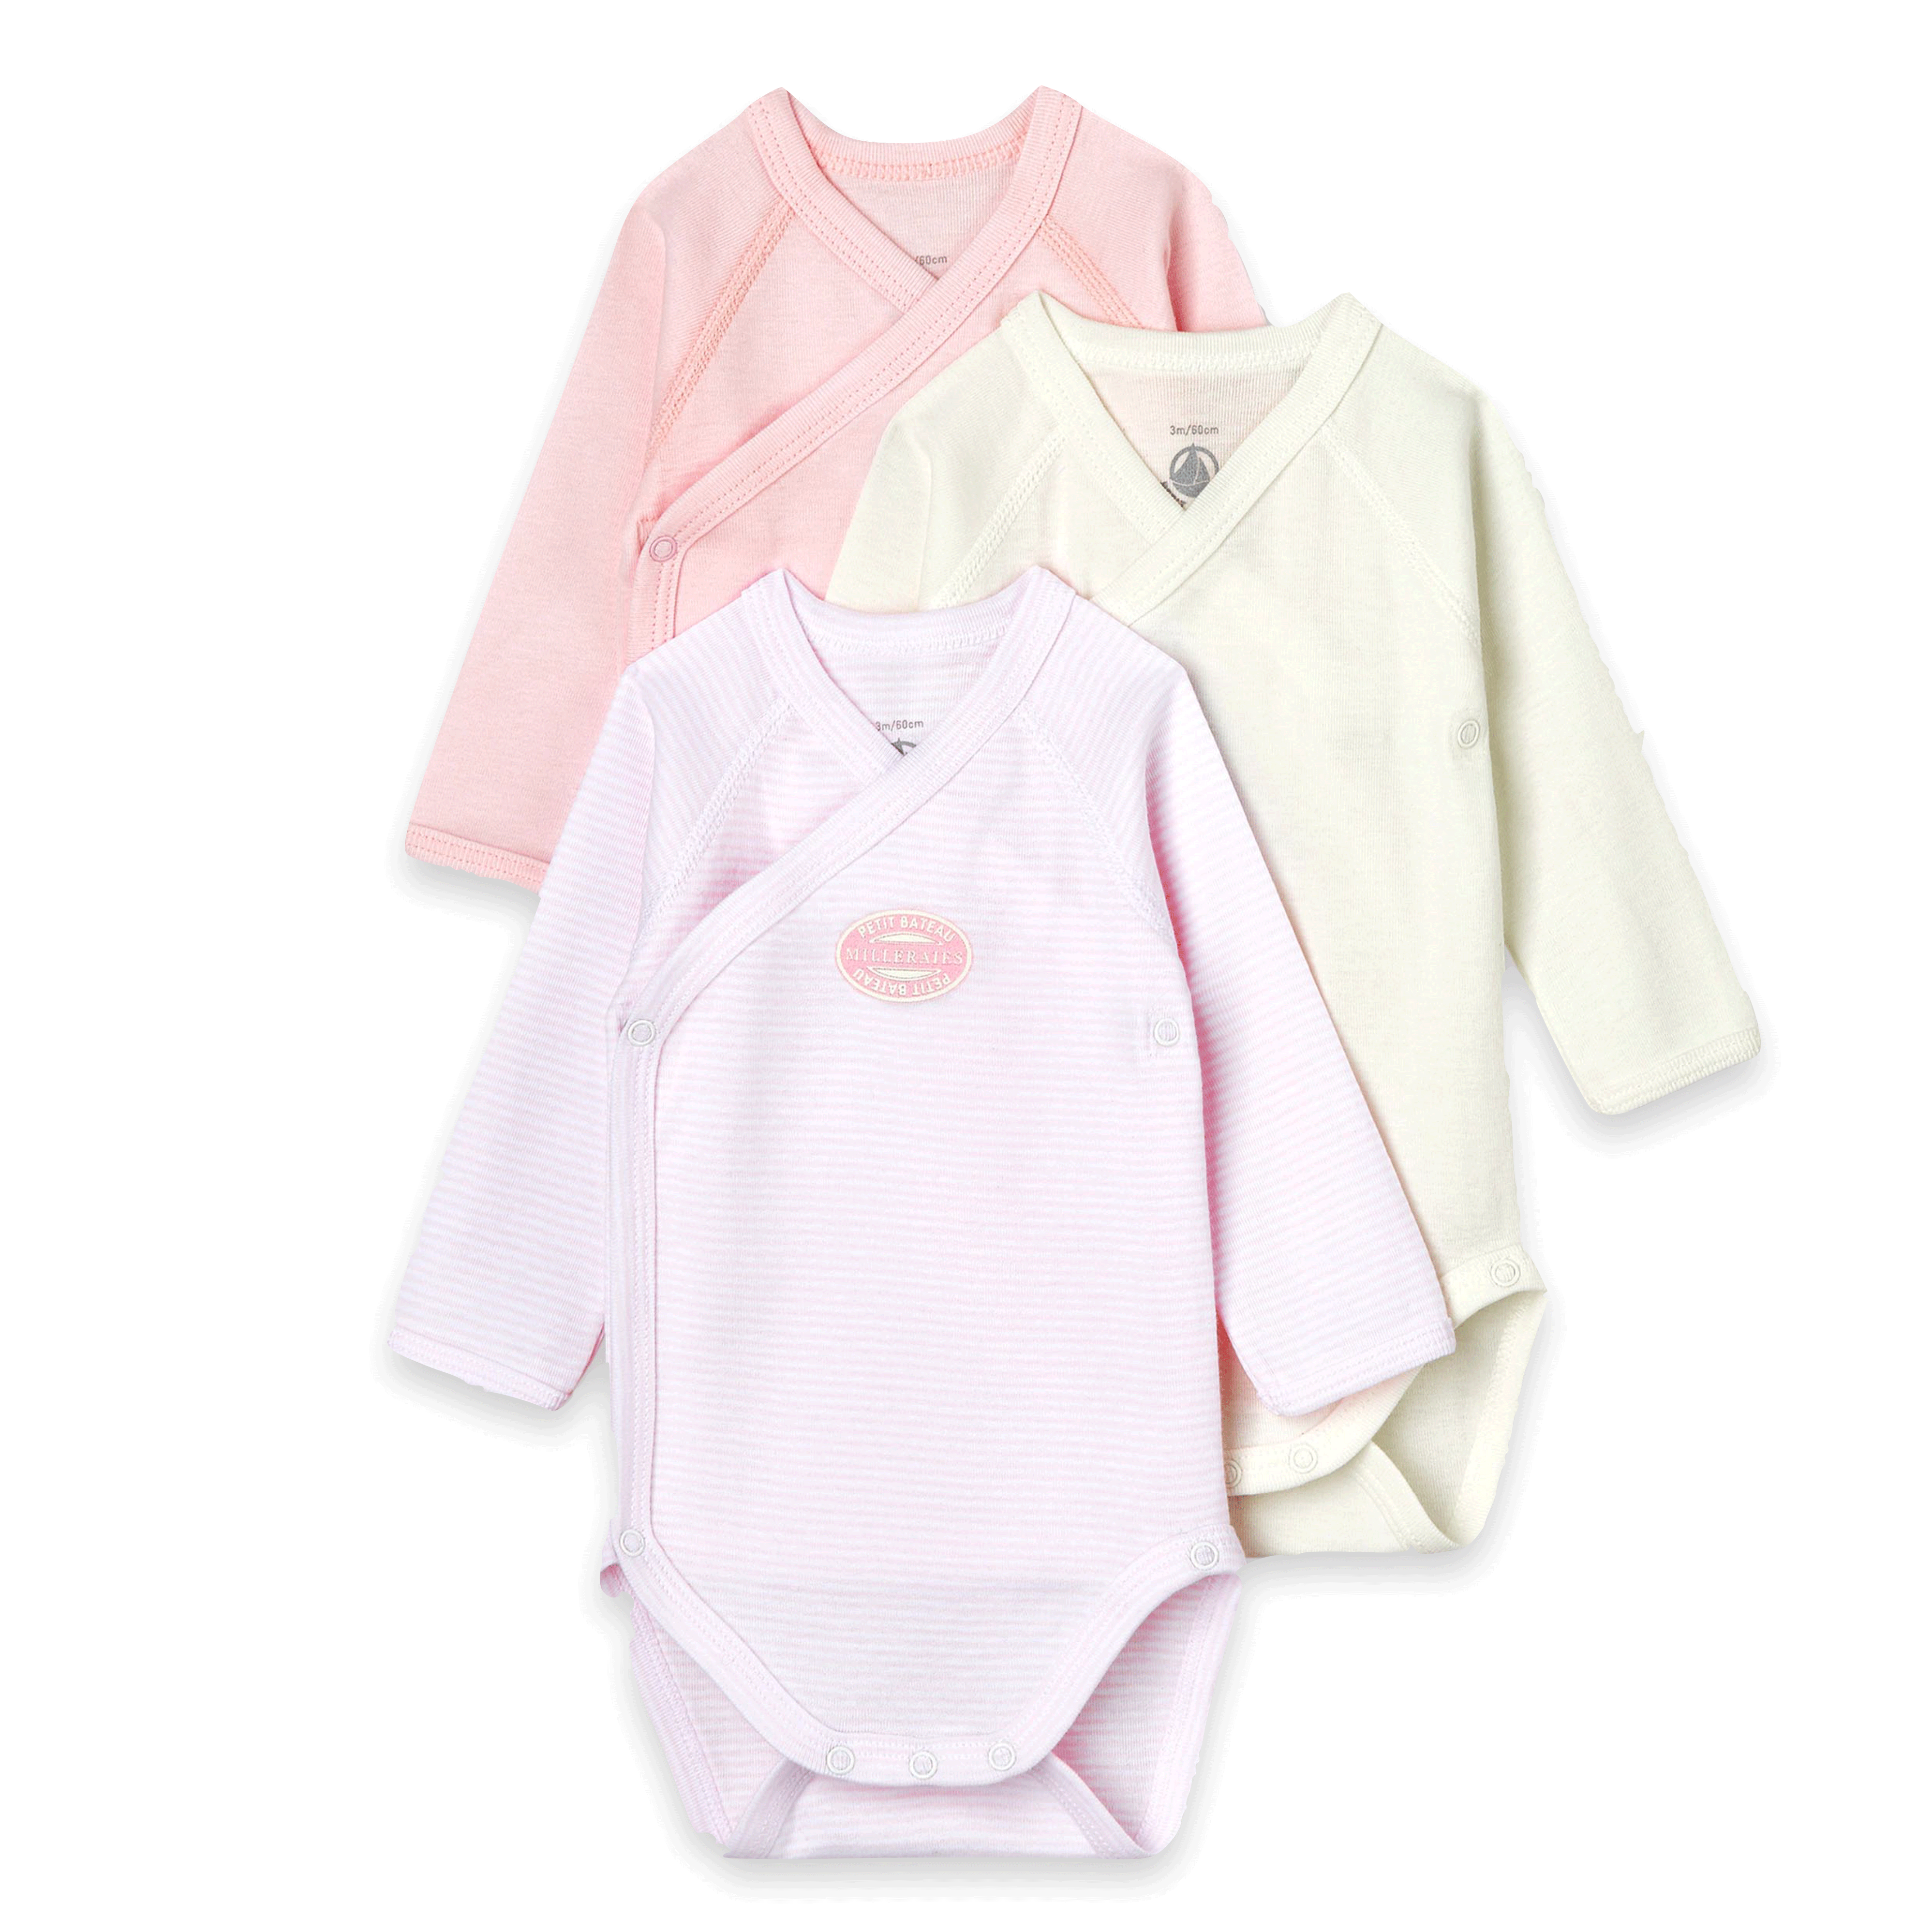 Petit Bateau set of 3 organic kimono onesies in pink at Bonjour Baby Baskets